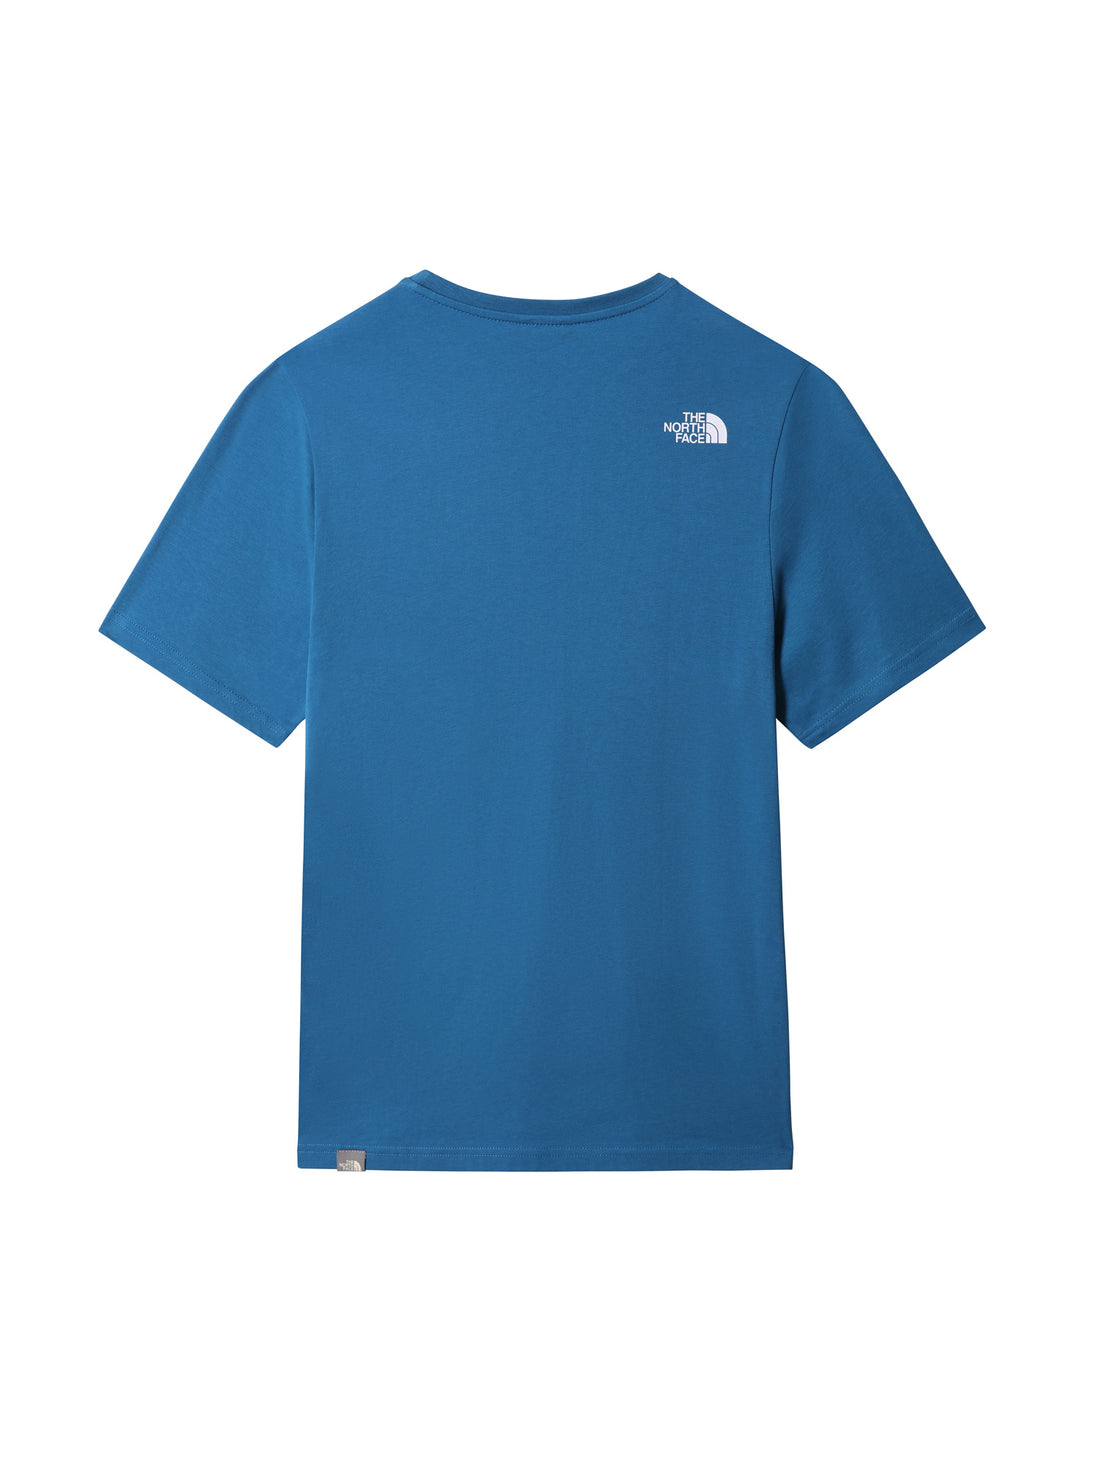 T-shirt Blu Eu M191 The North Face